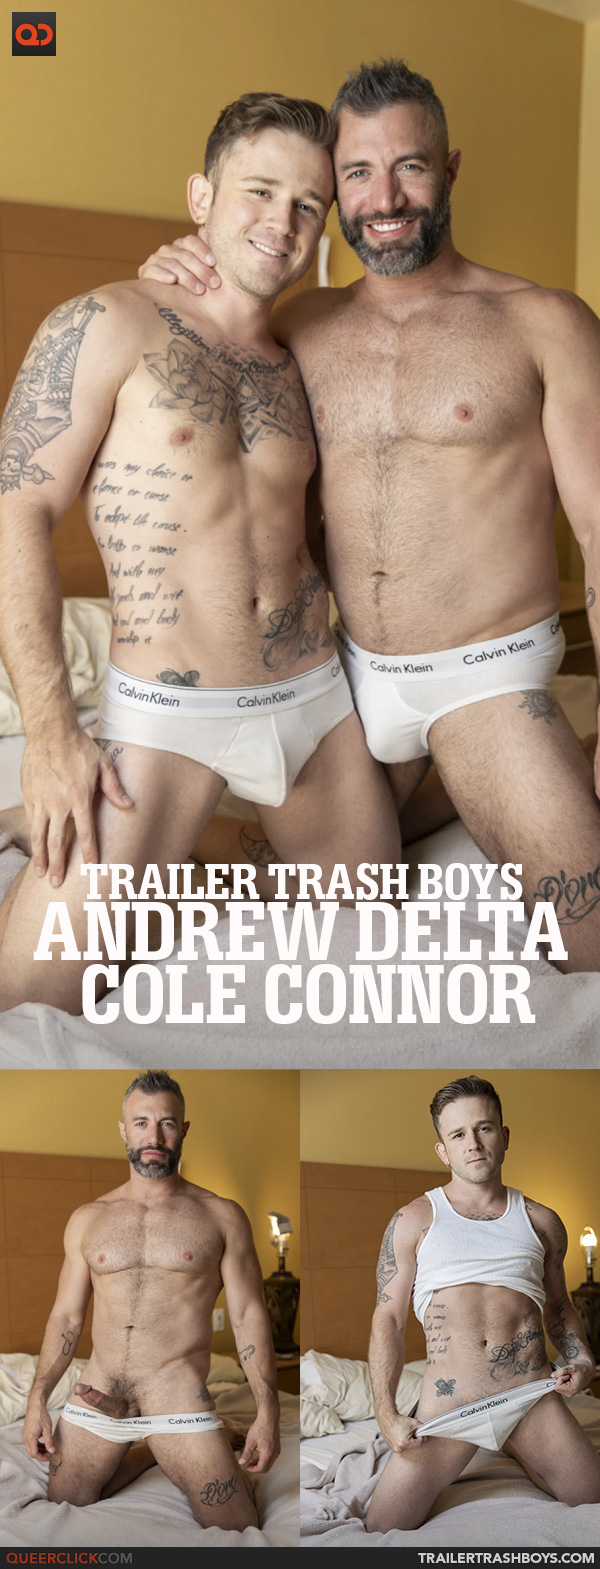 Trailer Trash Boys: Andrew Delta and Cole Connor